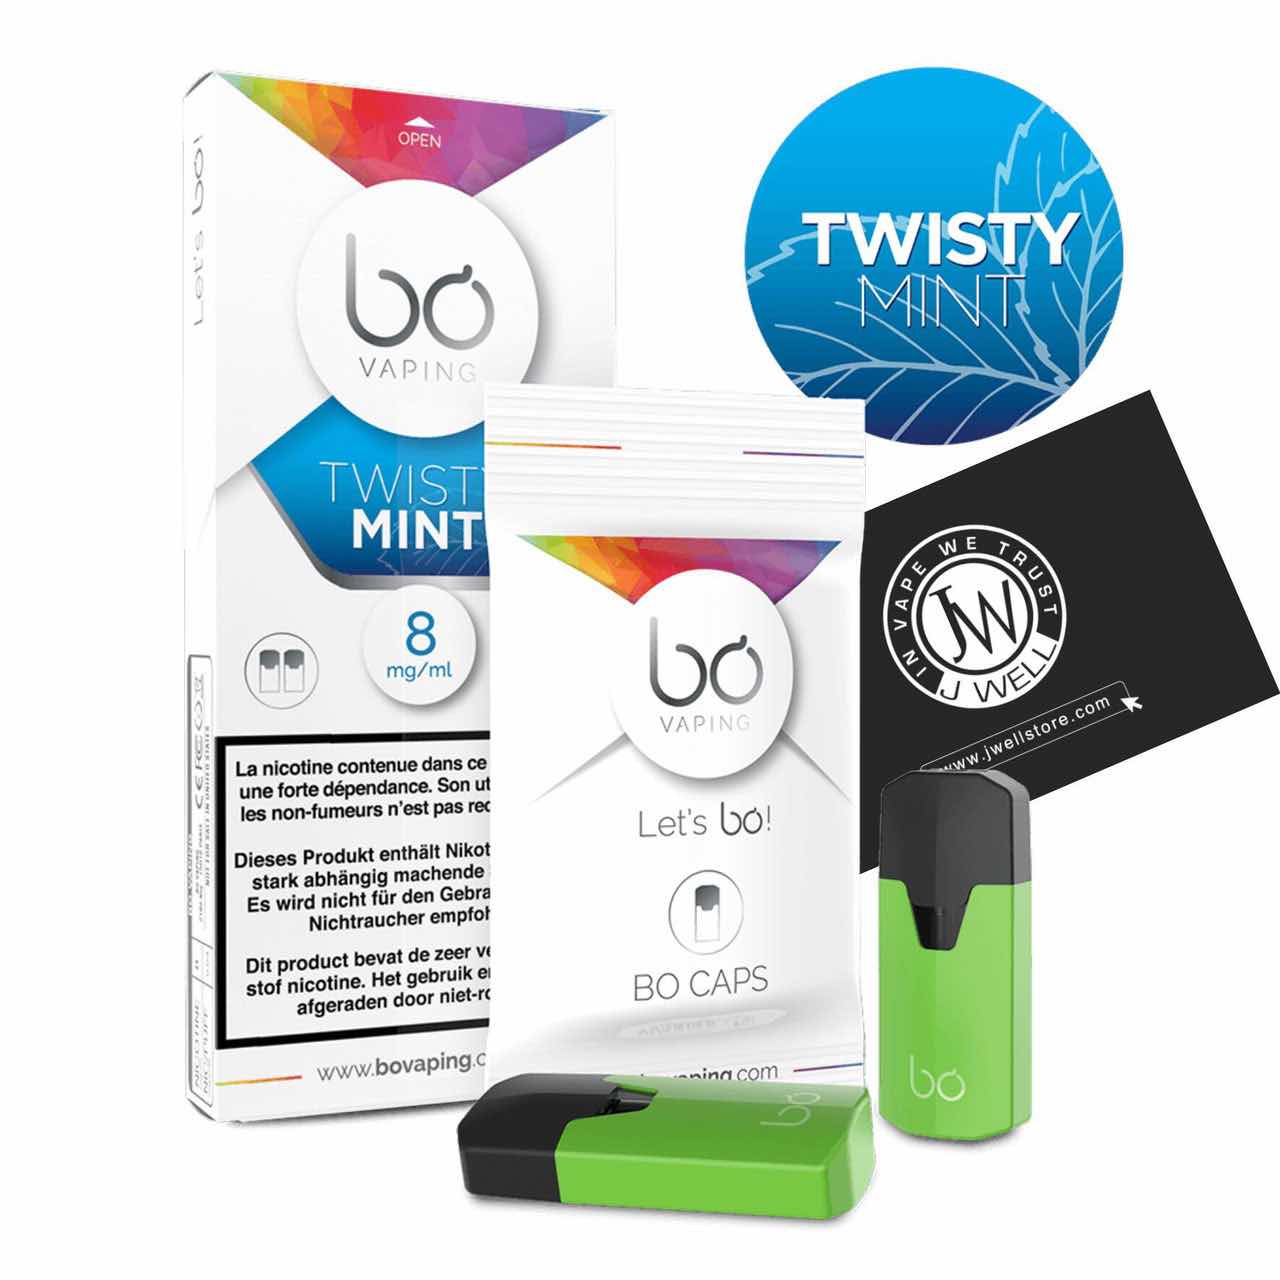 Image Bo Caps Twisty Mint